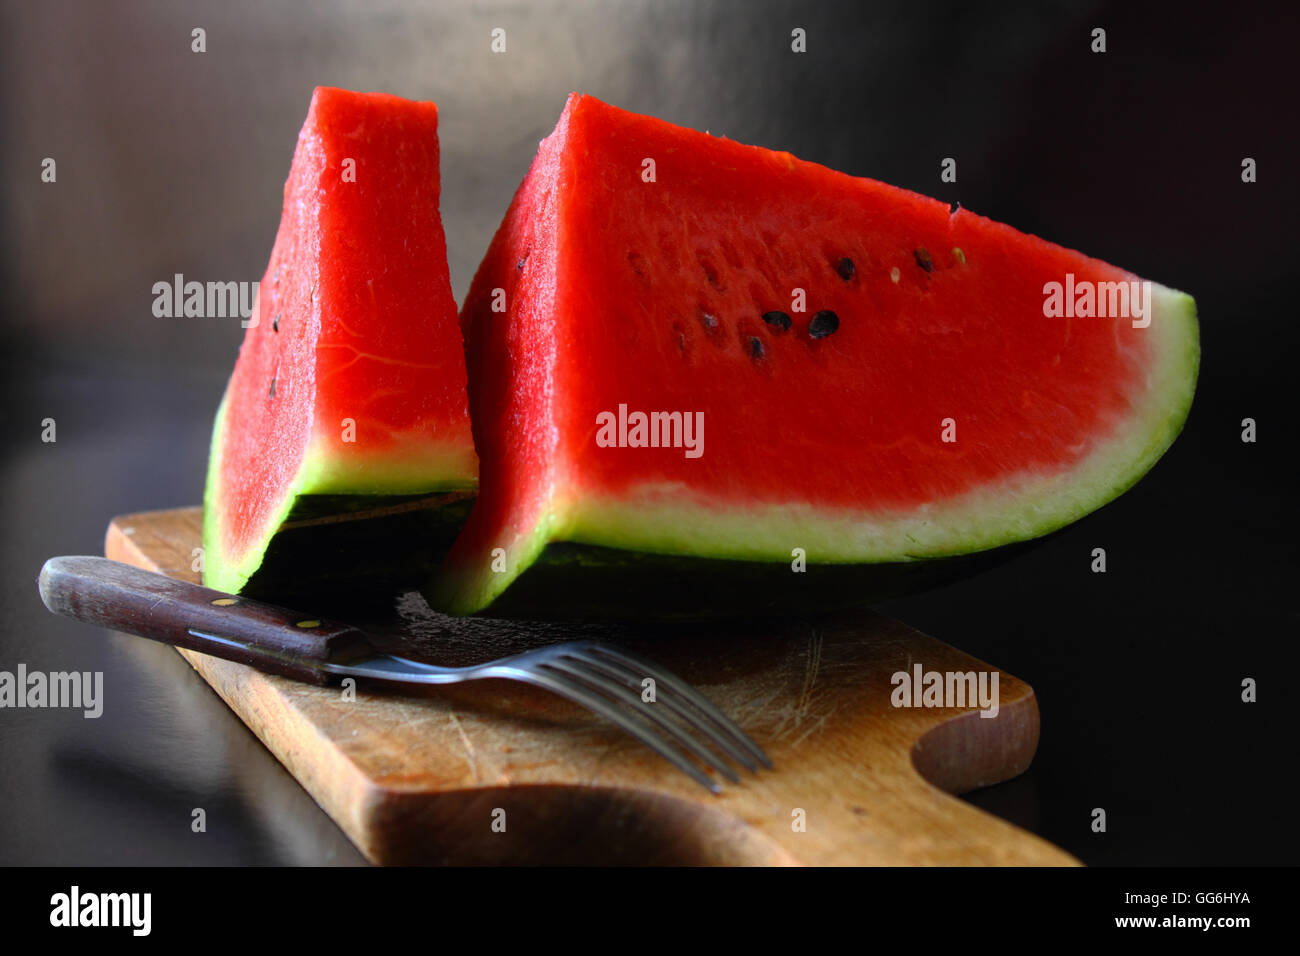 Watermelon ready to eat Stock Photo